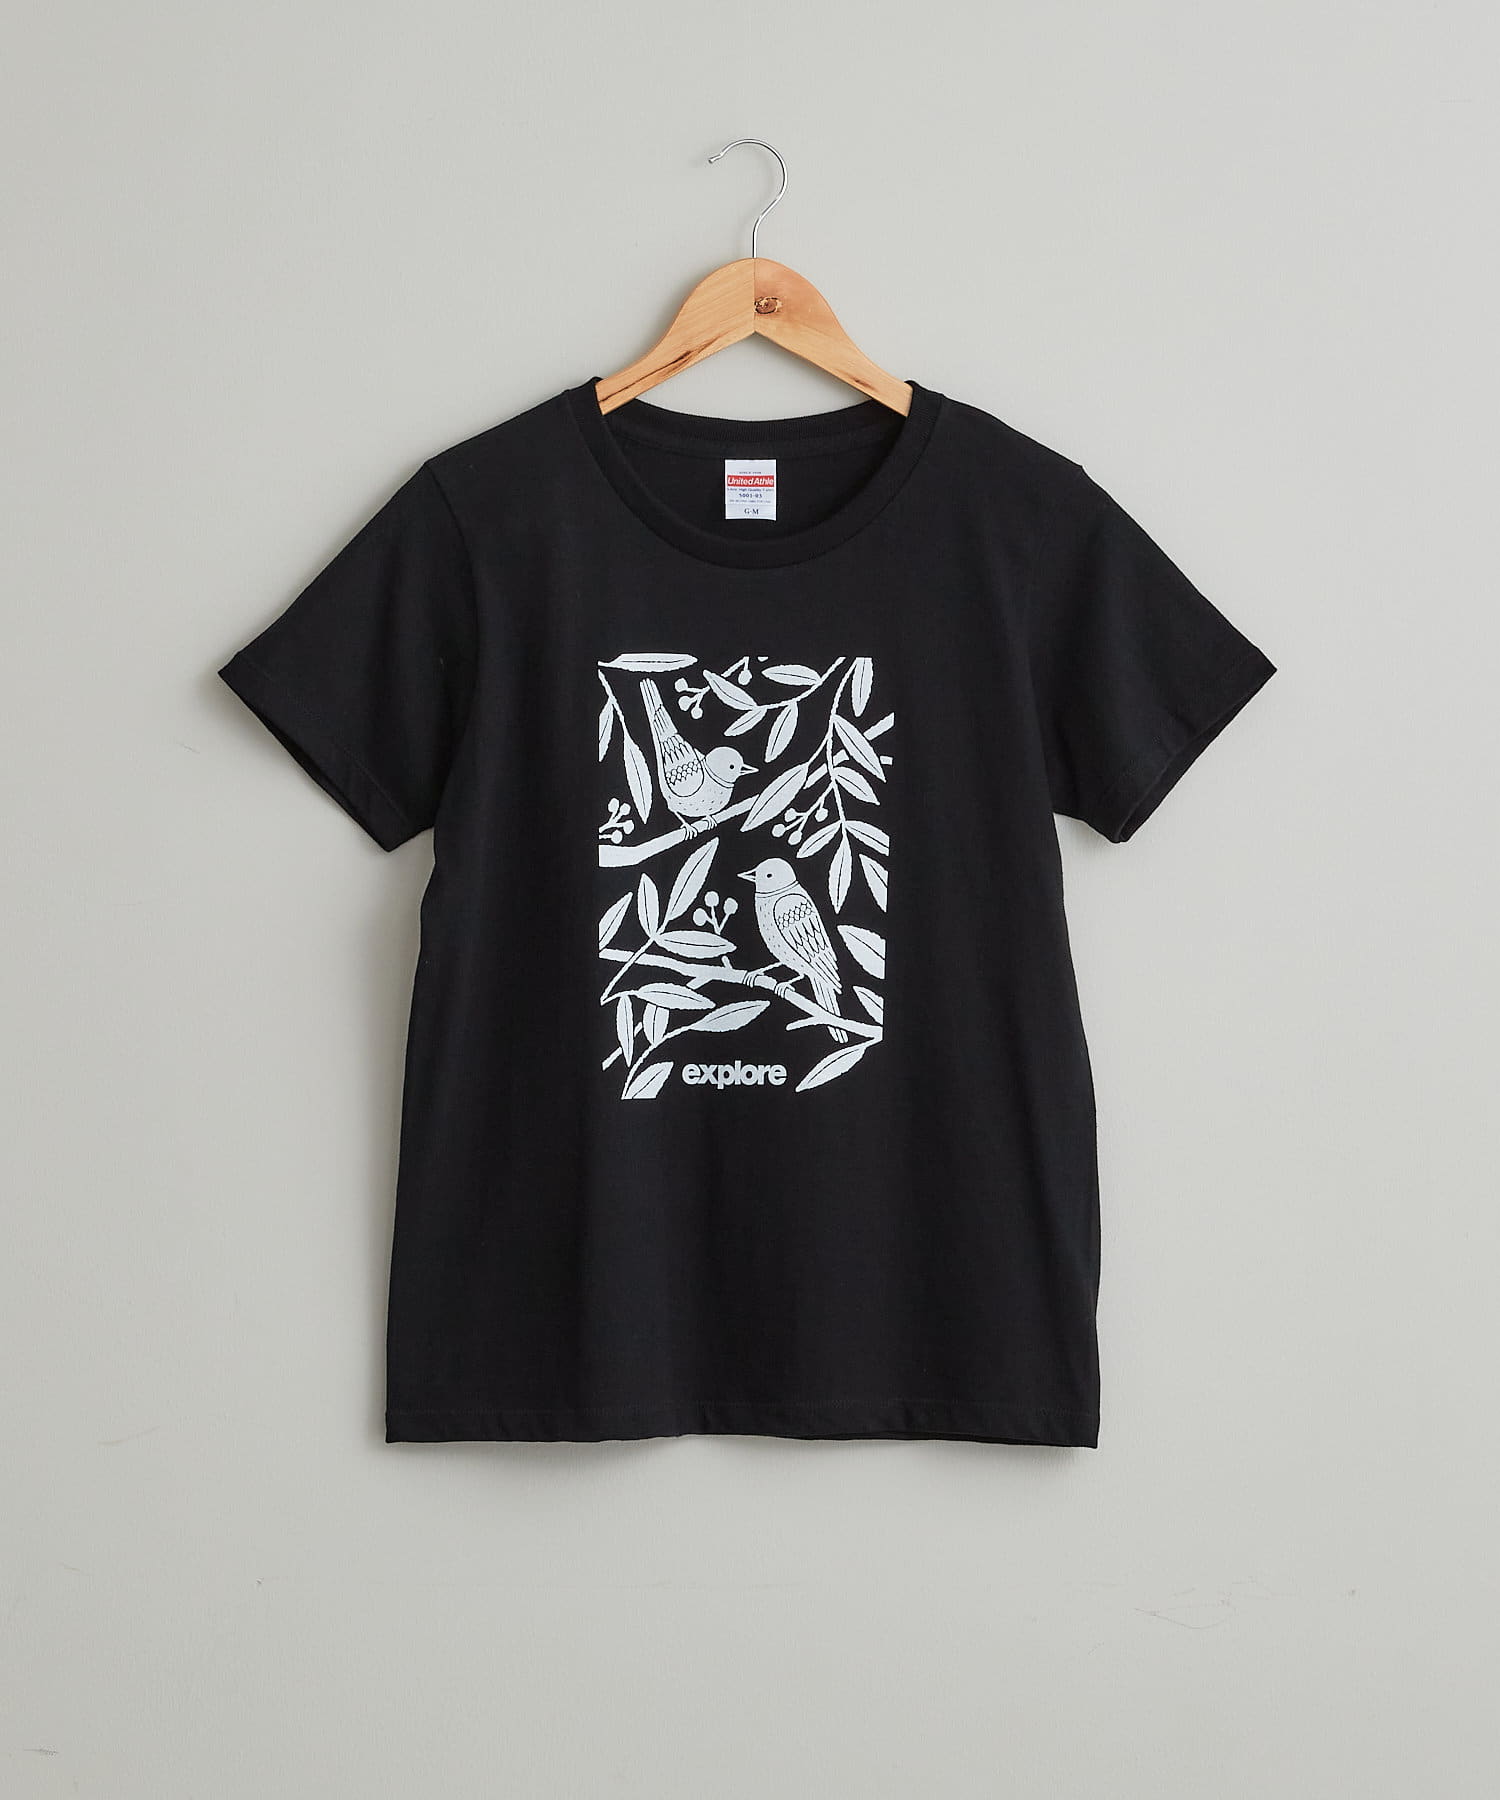 Pal collection(パルコレクション) 【PAL Tee】「explore」Tシャツ